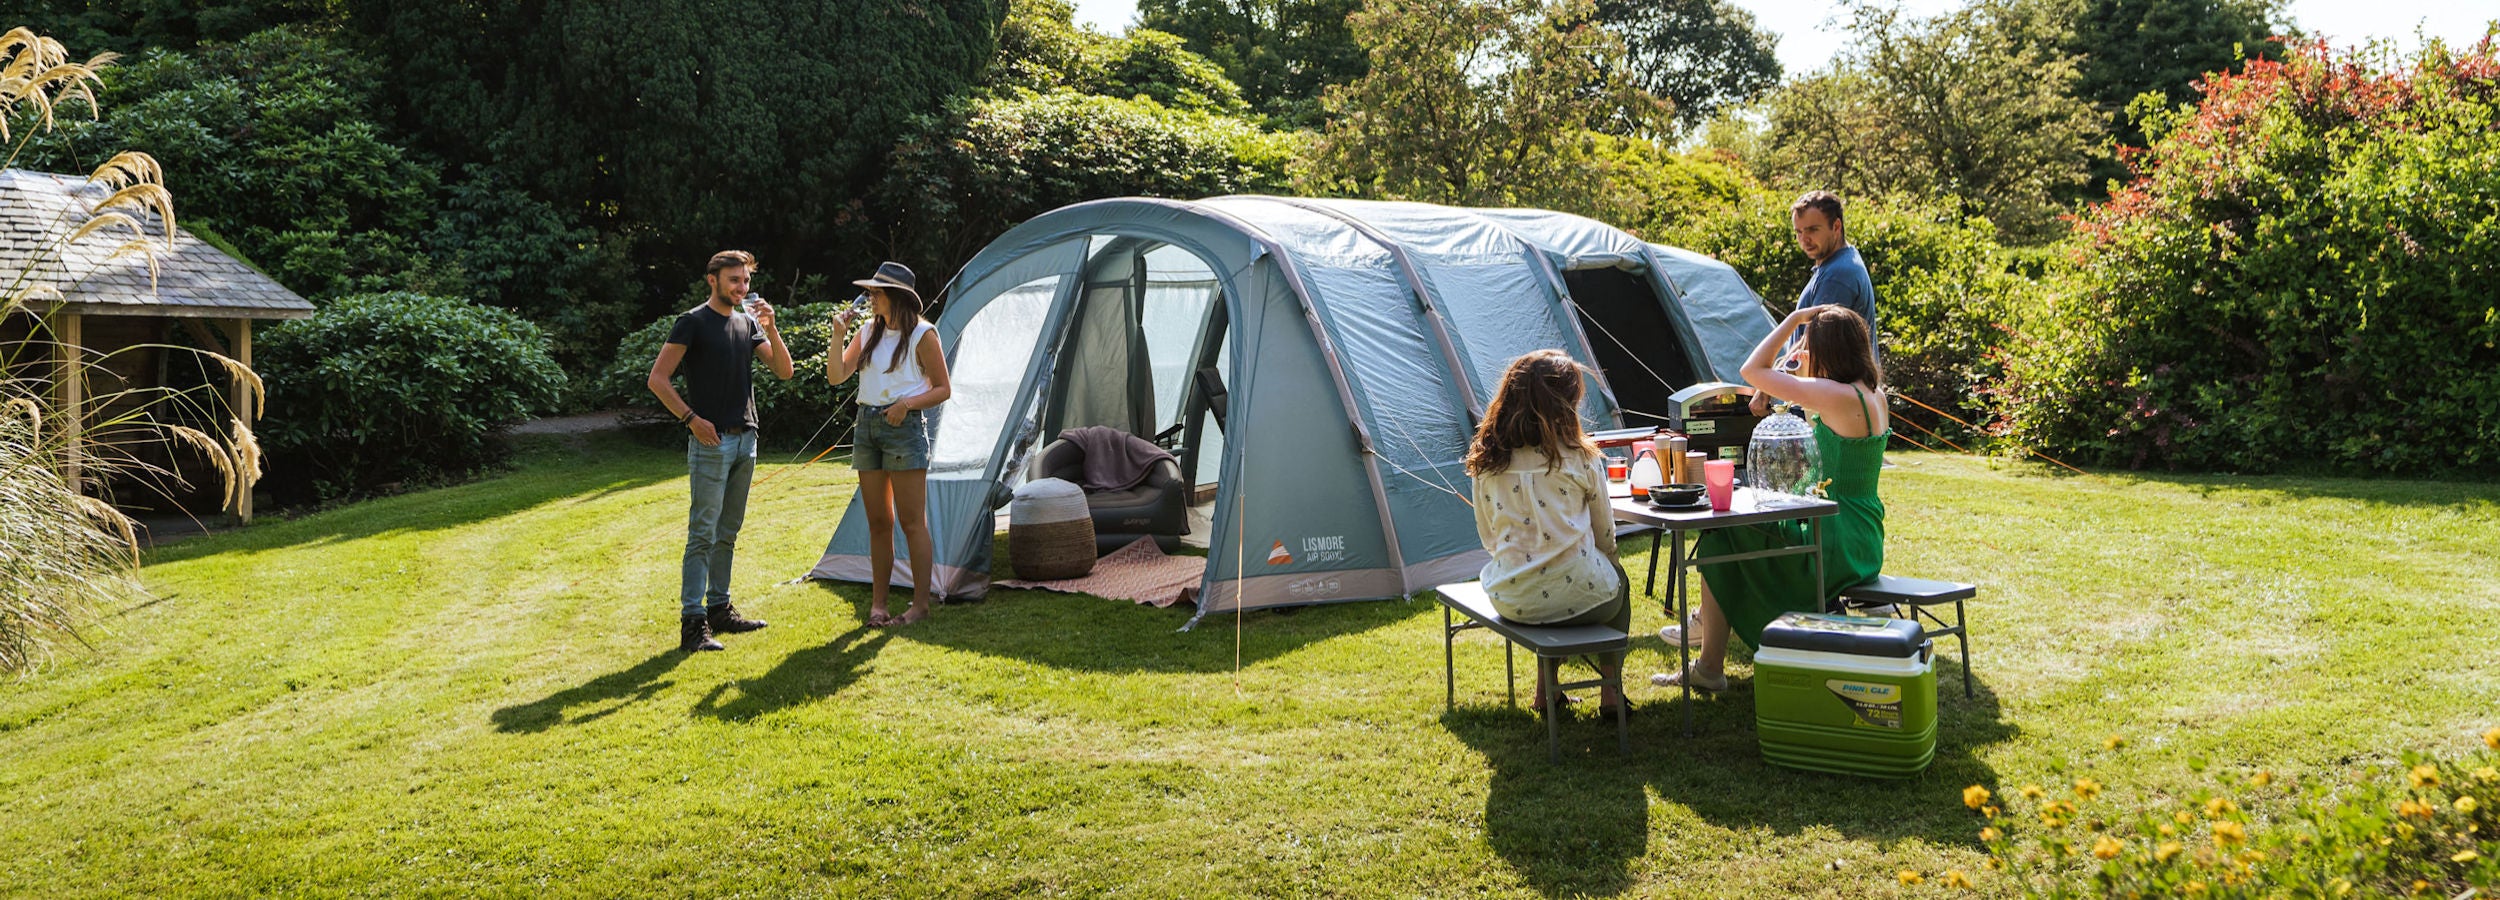 WM Camping Family Tent Range